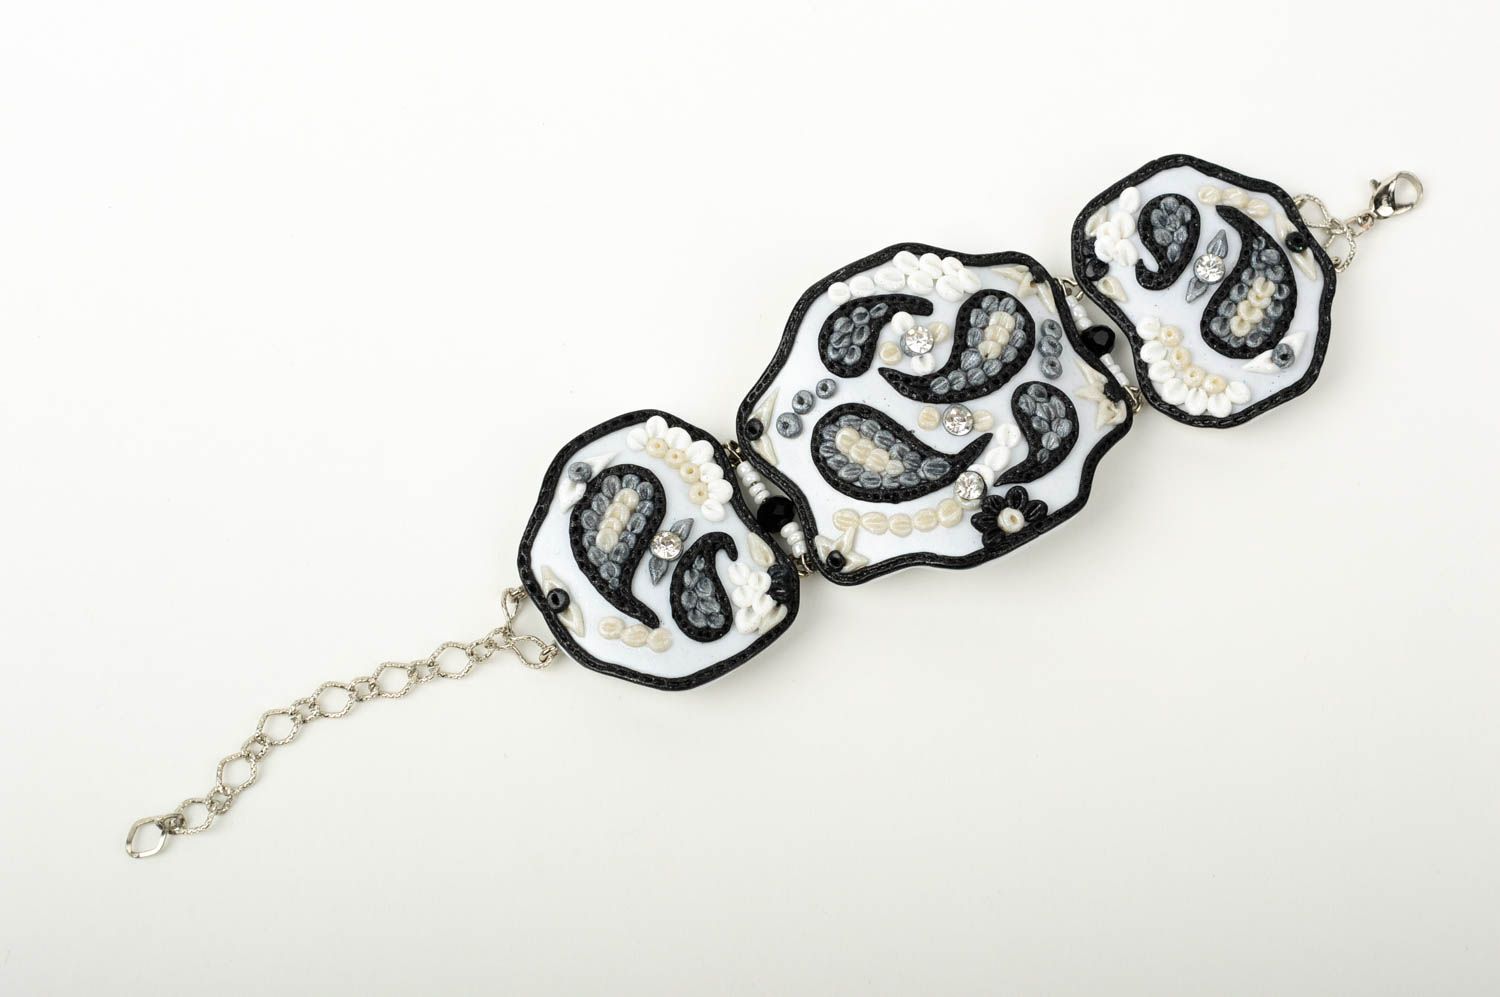 Handmade bracelet cuff bracelet polymer clay designer jewelry fashion accessory photo 1